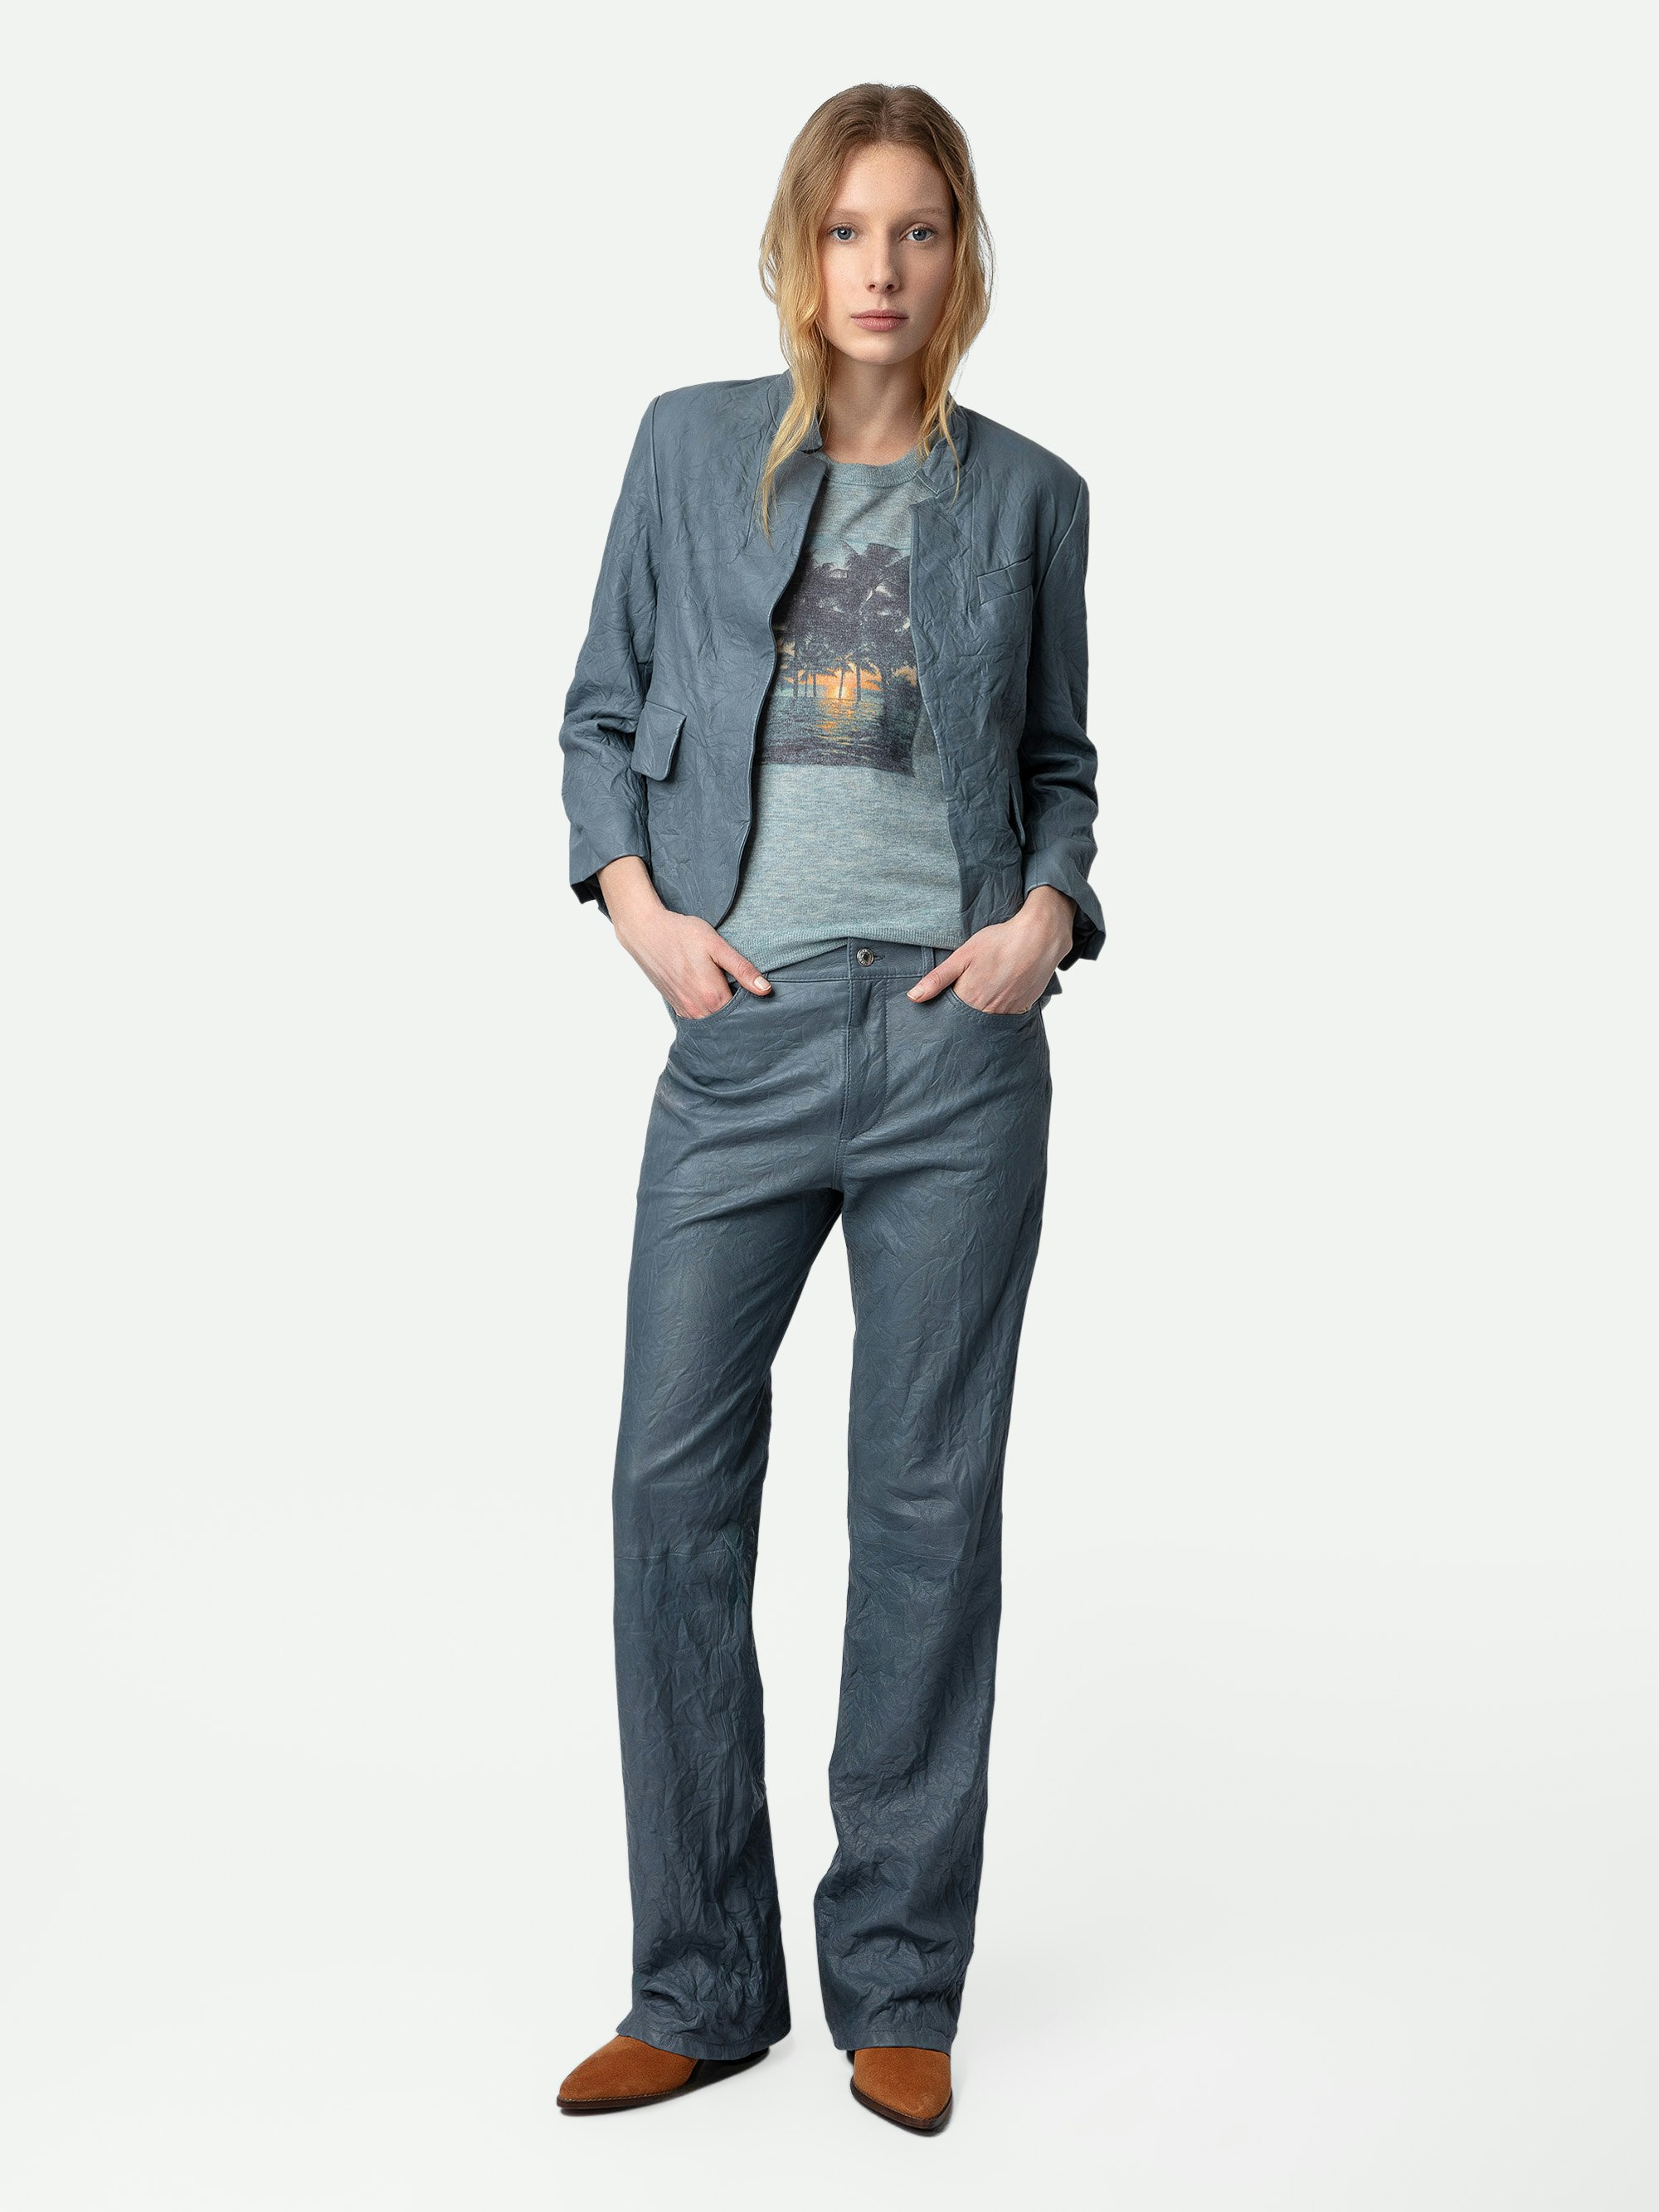 Verys Crinkled Leather Blazer - Women’s light blue crinkled leather blazer with 3/4-length sleeves.